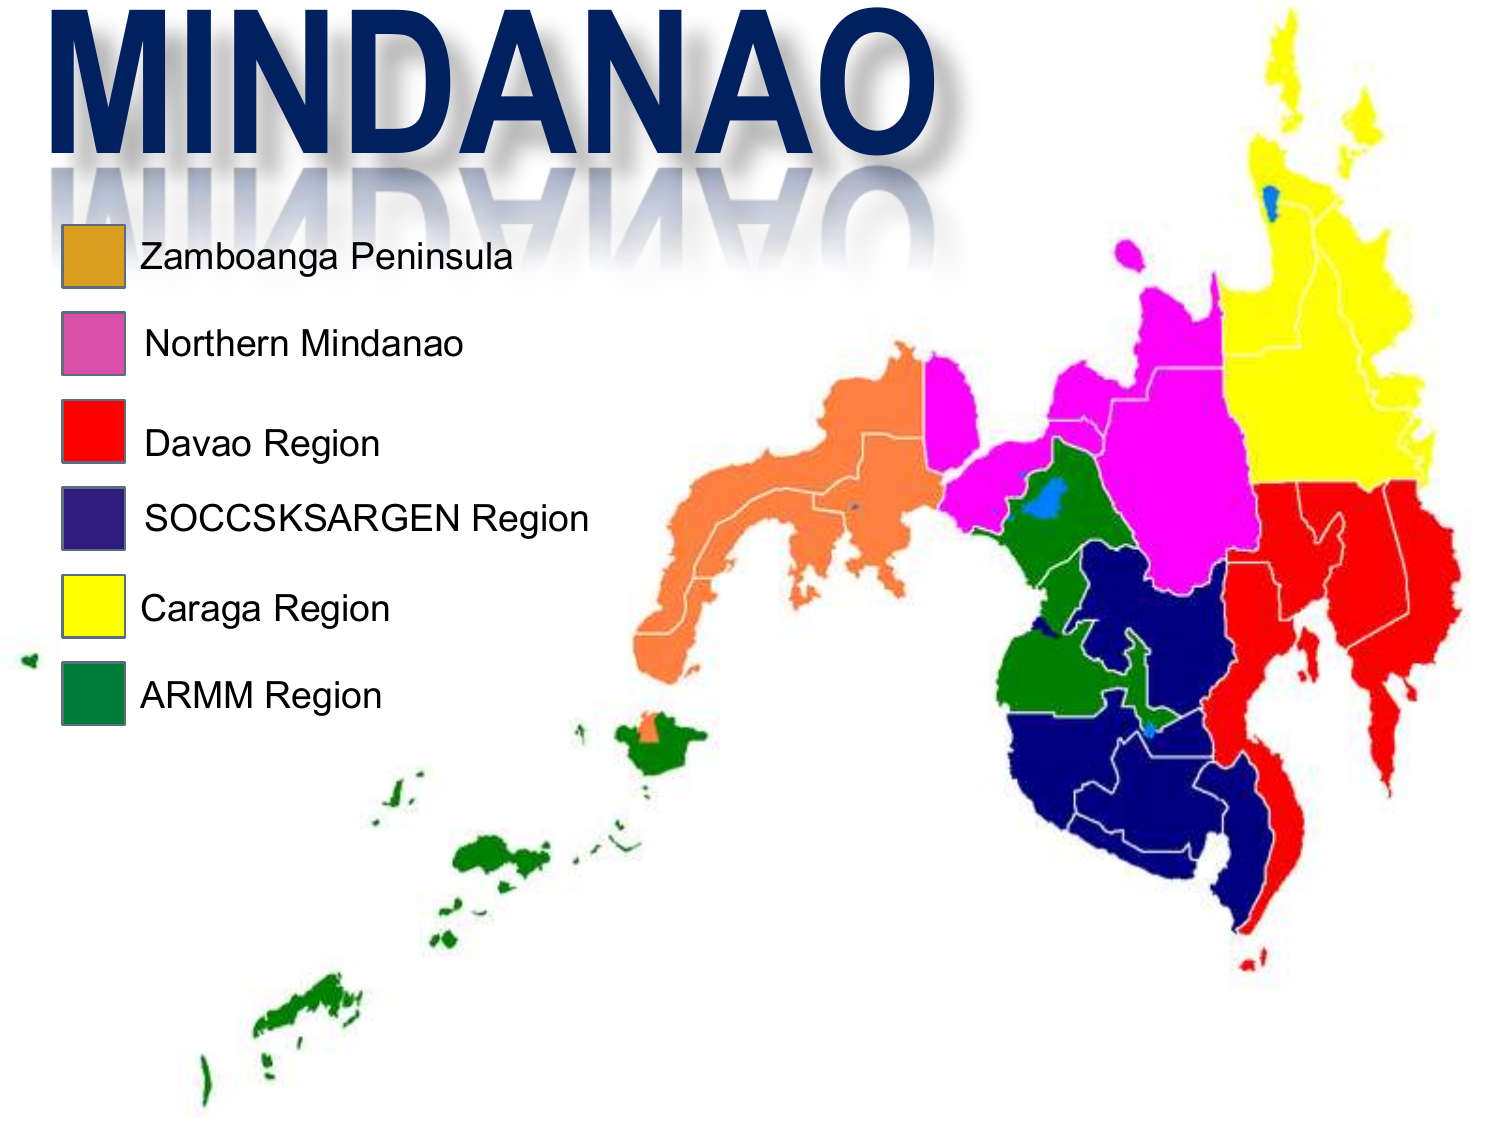 Arts And Crafts Of Mindanao